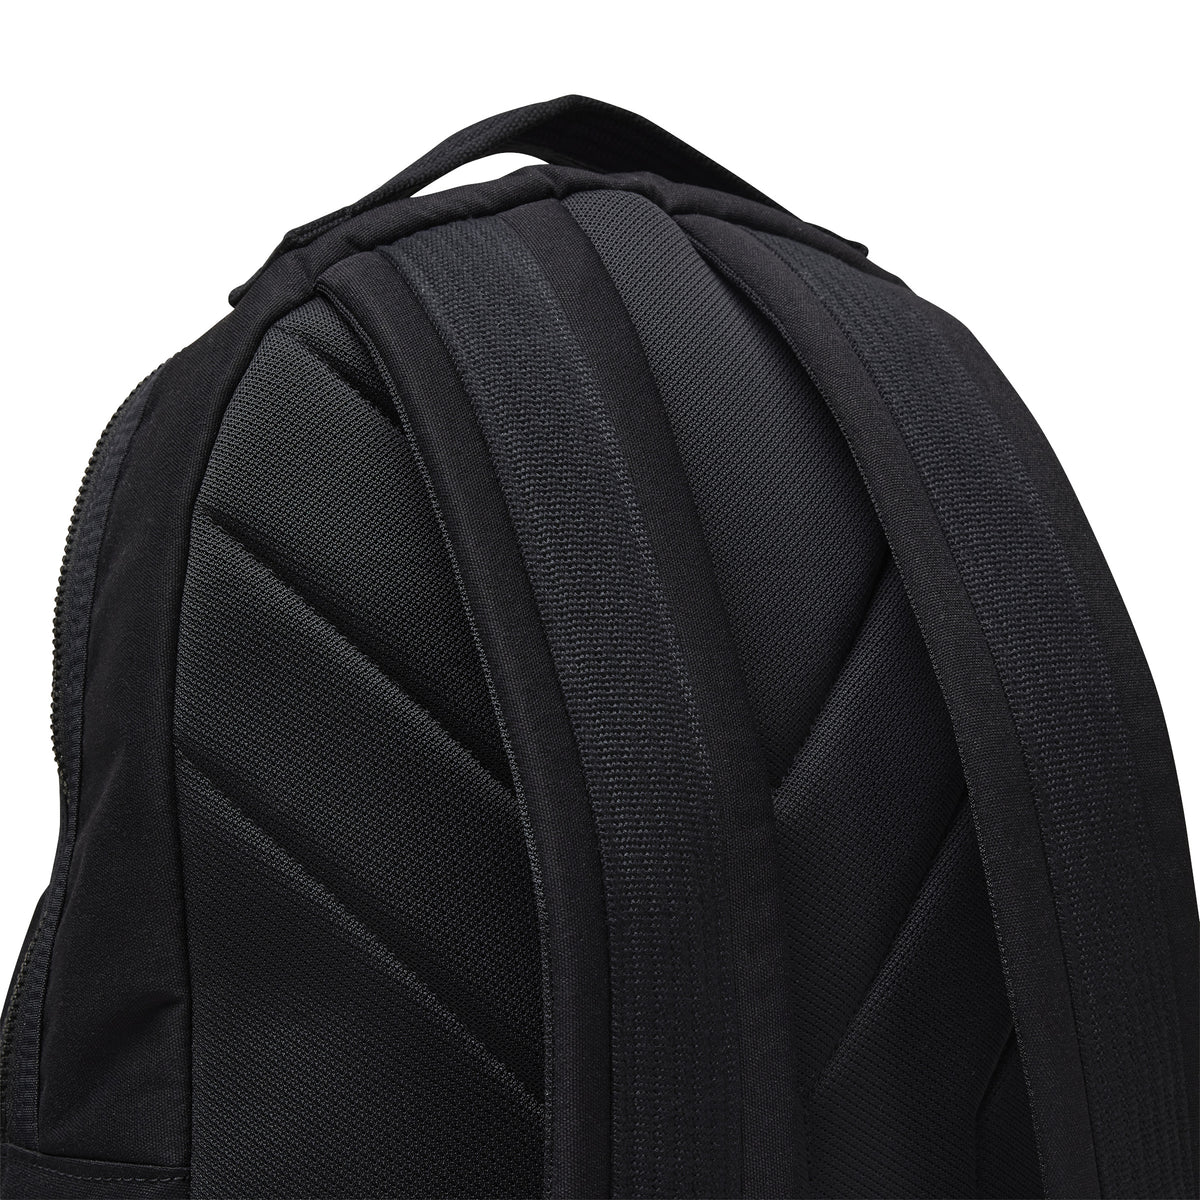 Y-3 Classic Backpack - Black